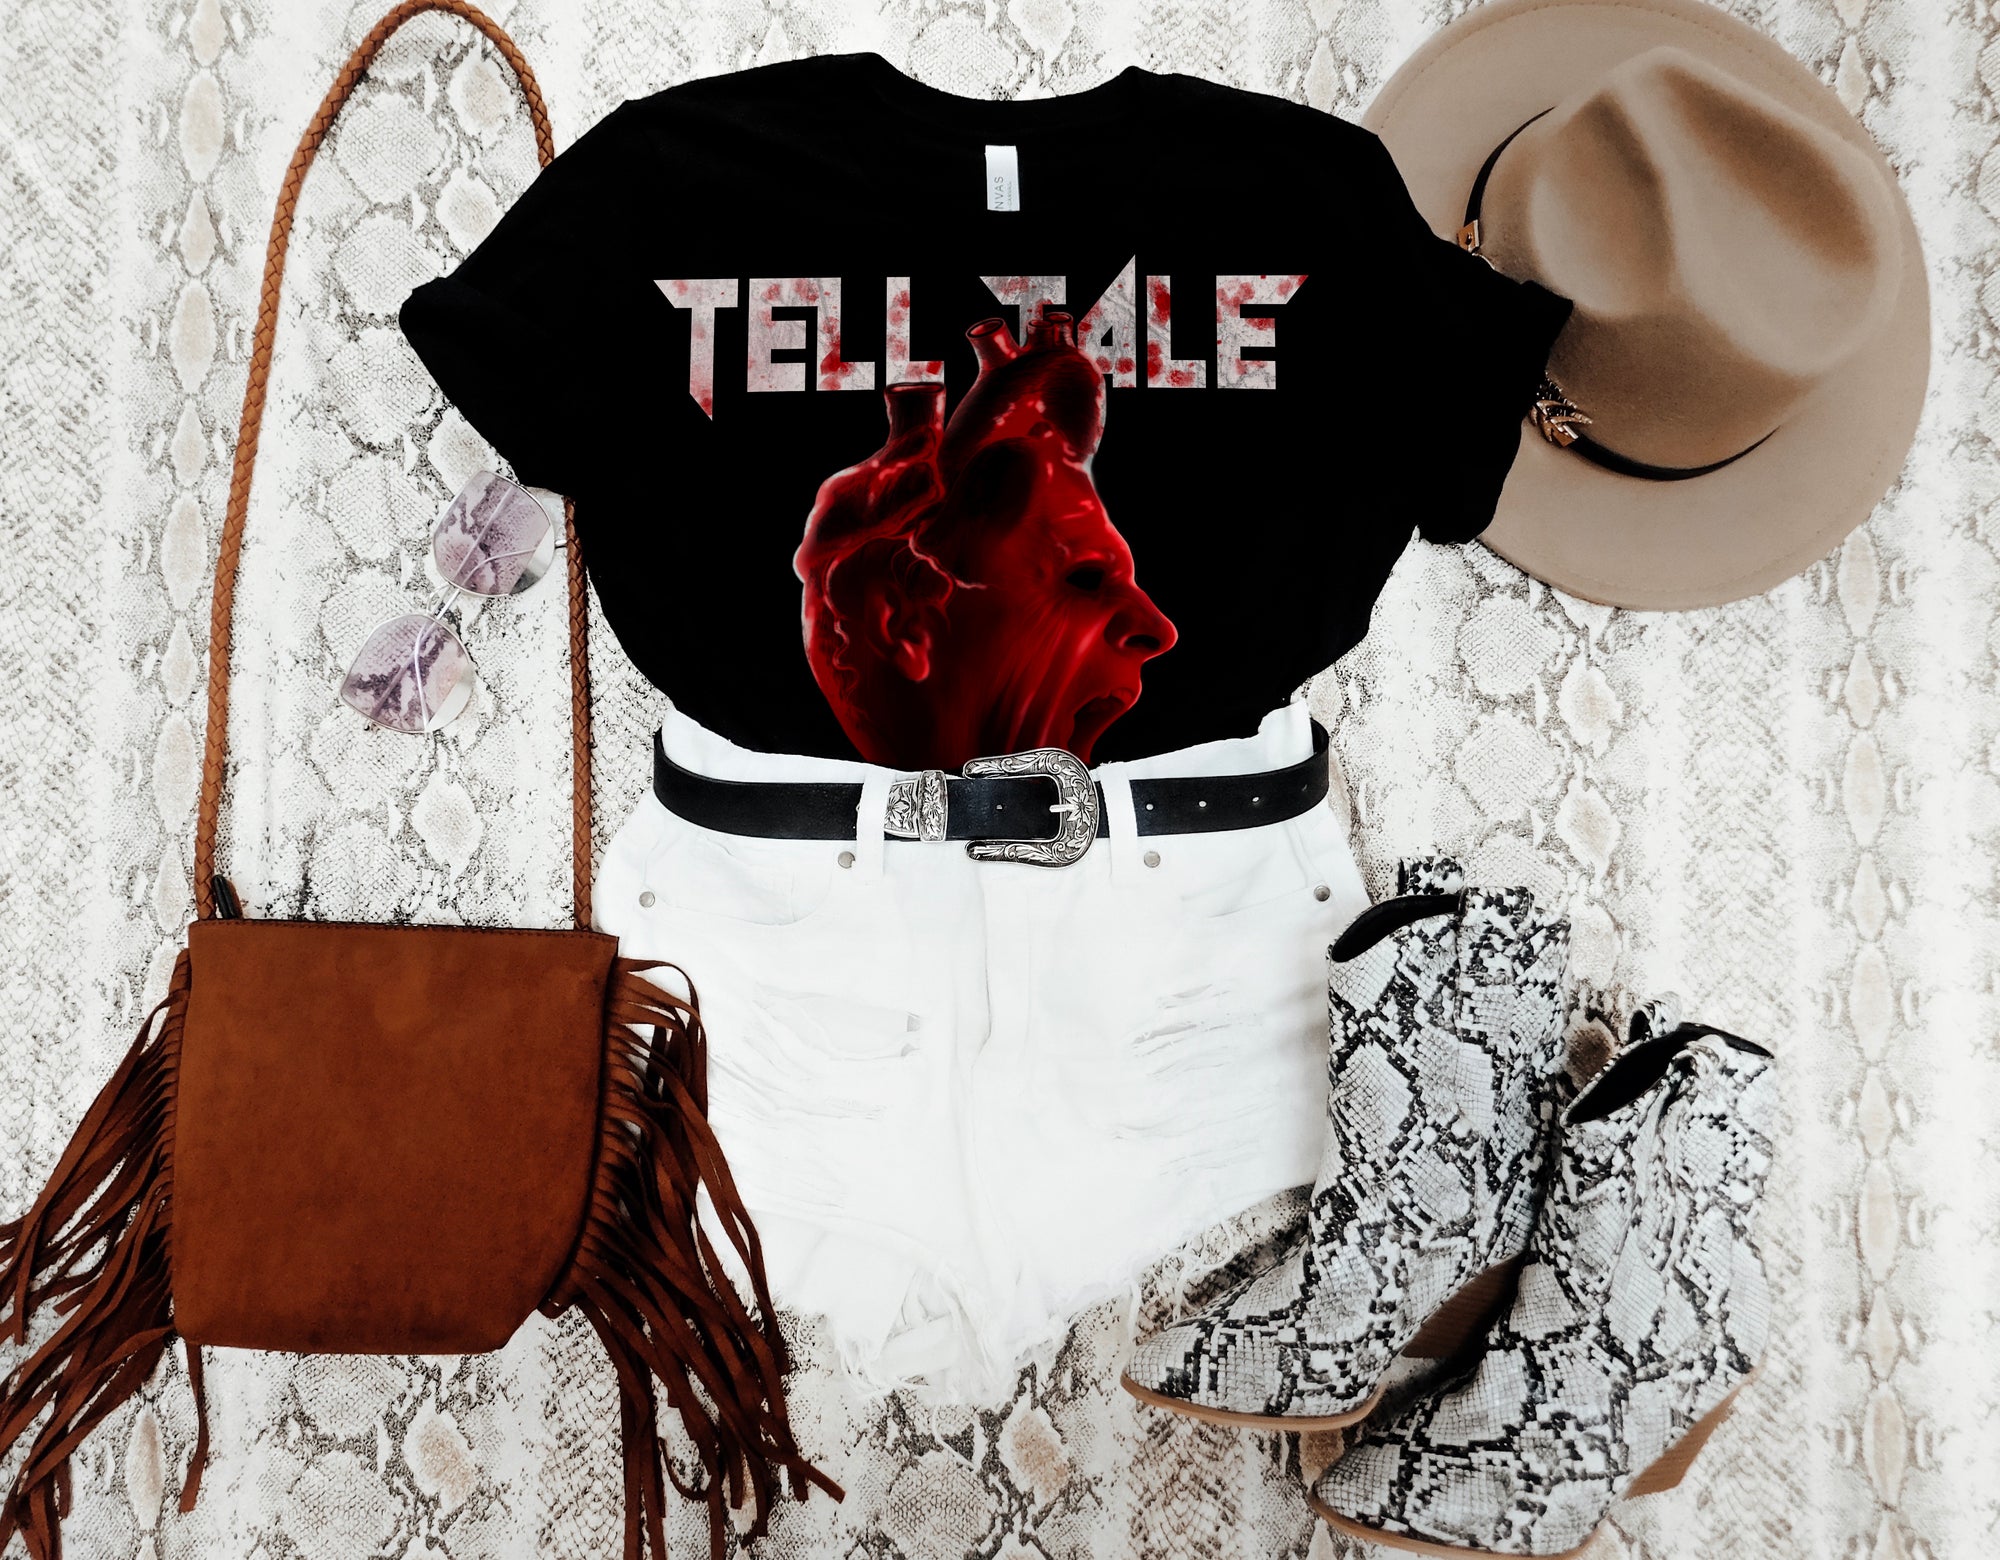 Tell Tale Heart Band Tee